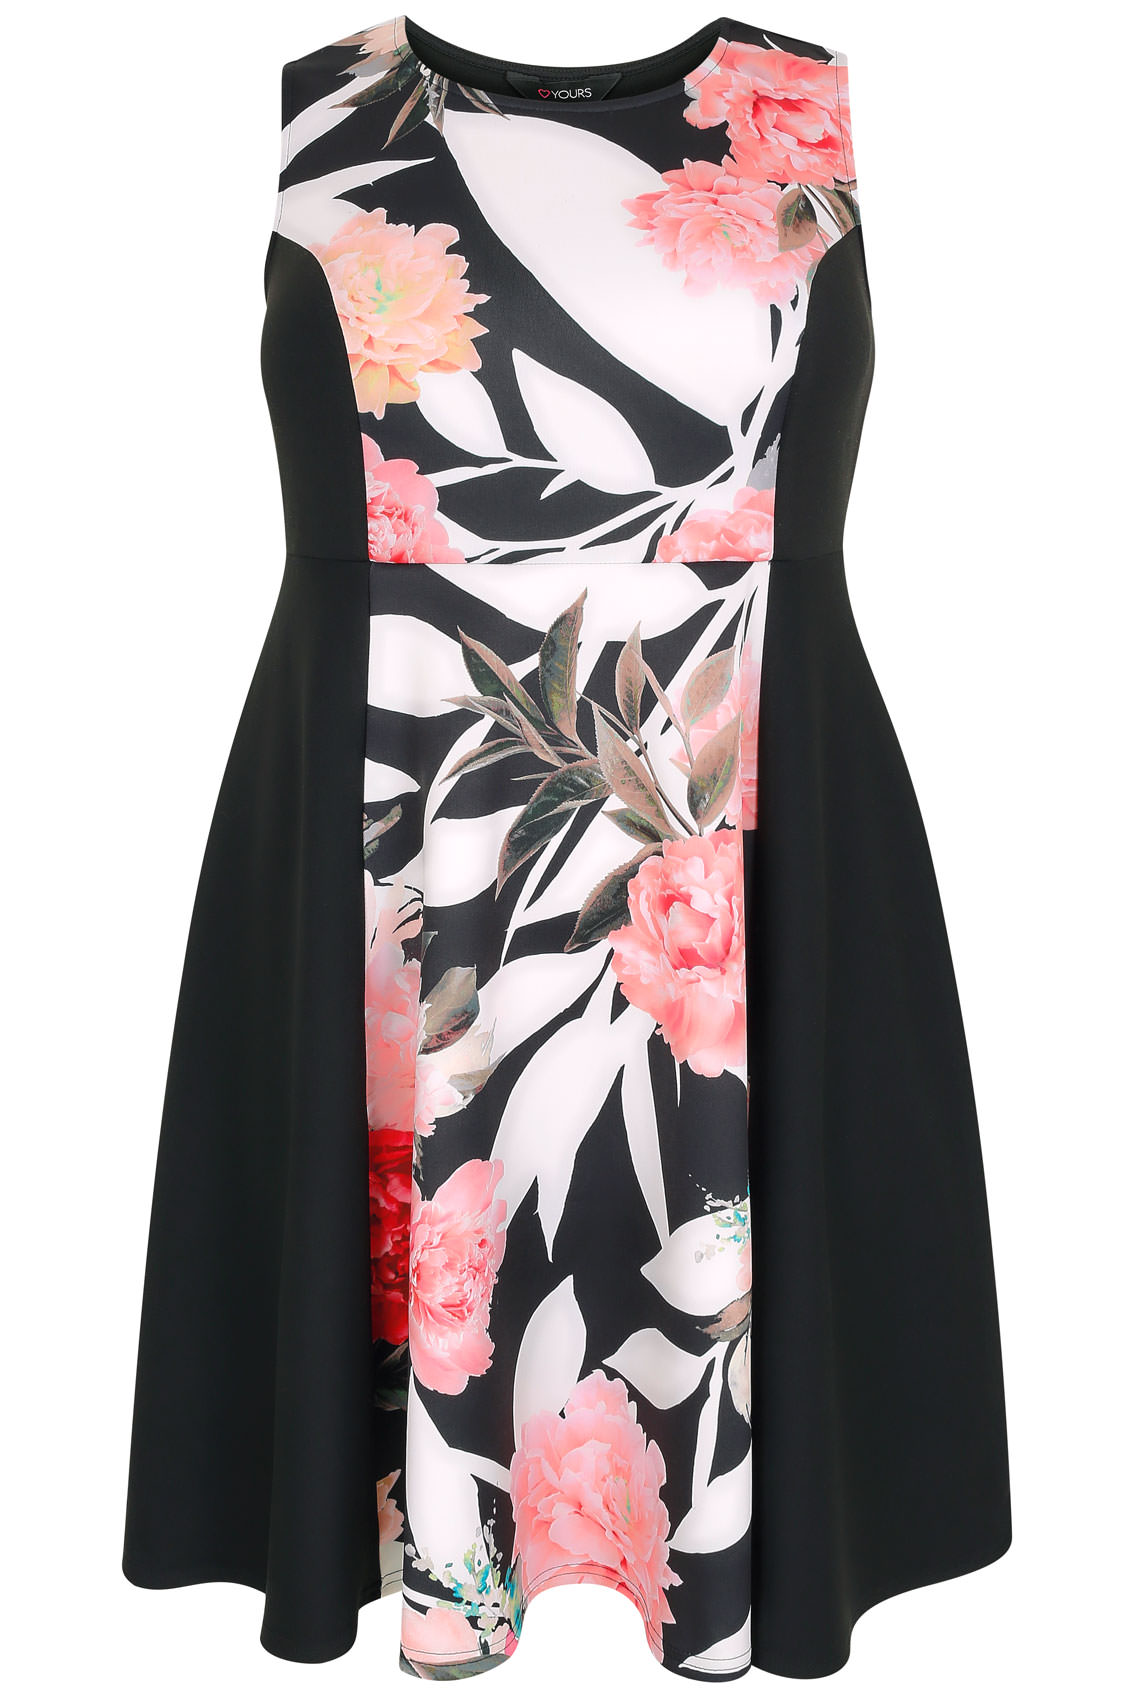 Black & Pink Floral Mono Panel Sleeveless Skater Dress plus size 16 to 36